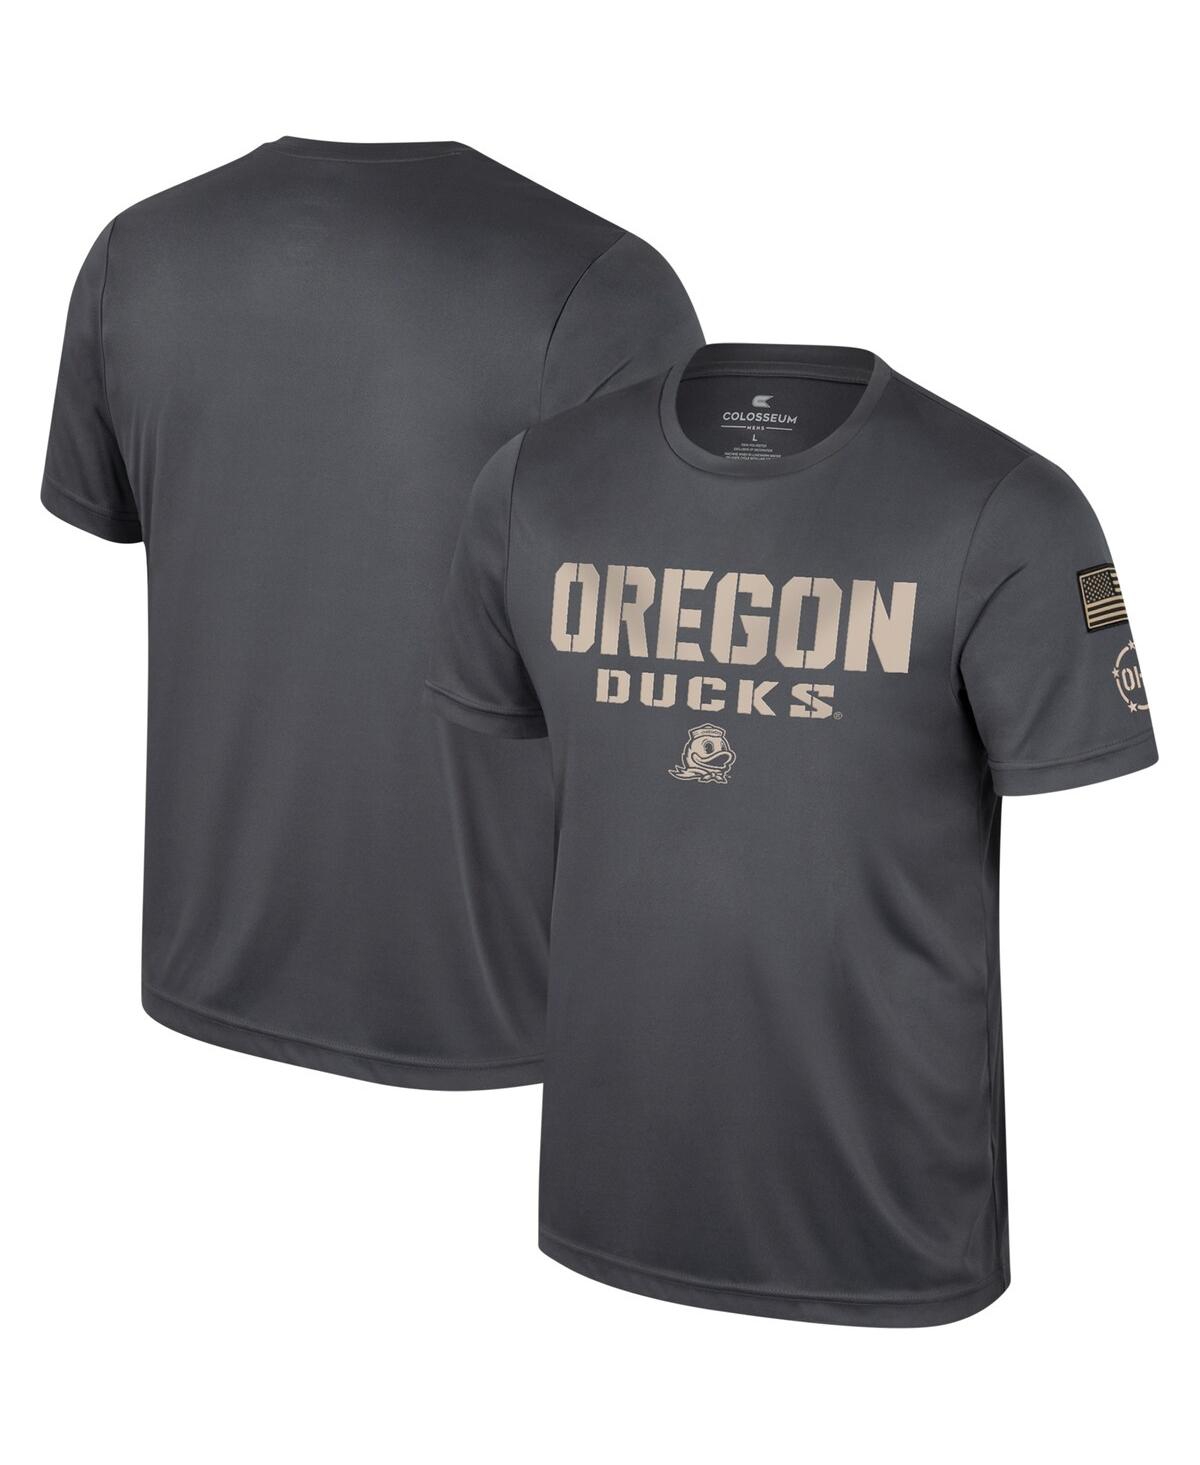 Men's Colosseum Charcoal Oregon Ducks Oht Military-Inspired Appreciation T-shirt - Charcoal